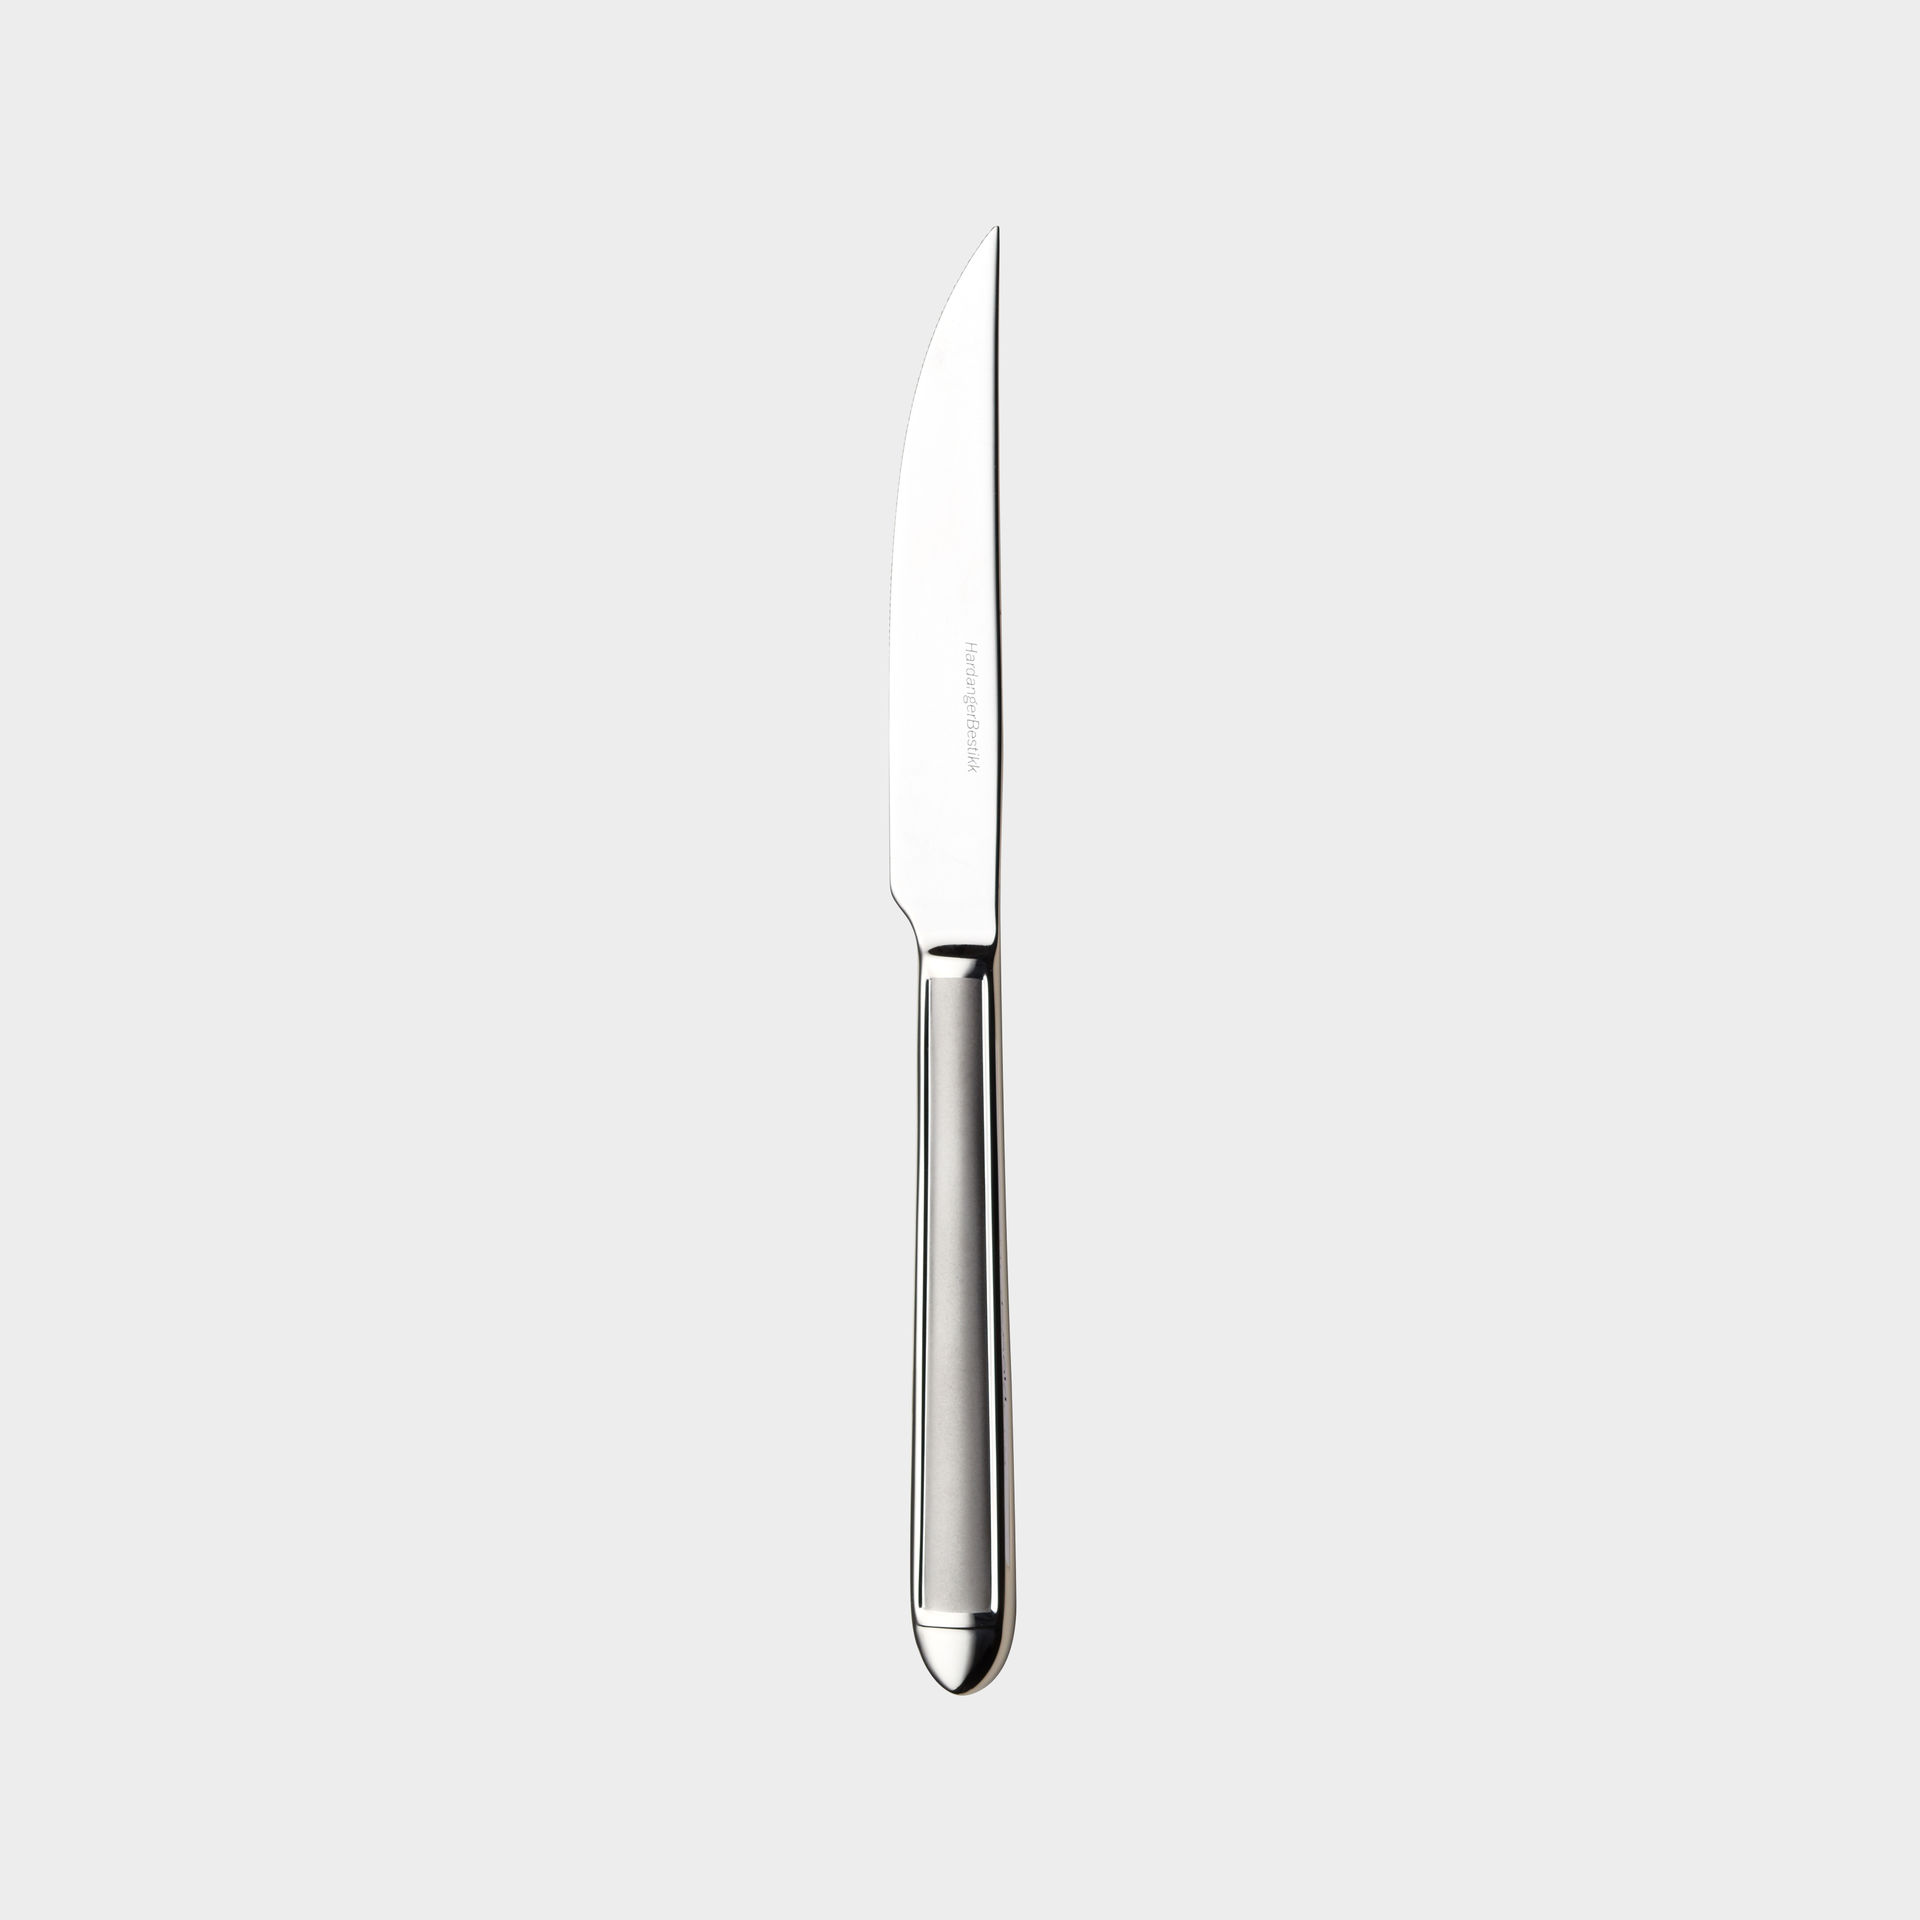 Nora steak knife product image